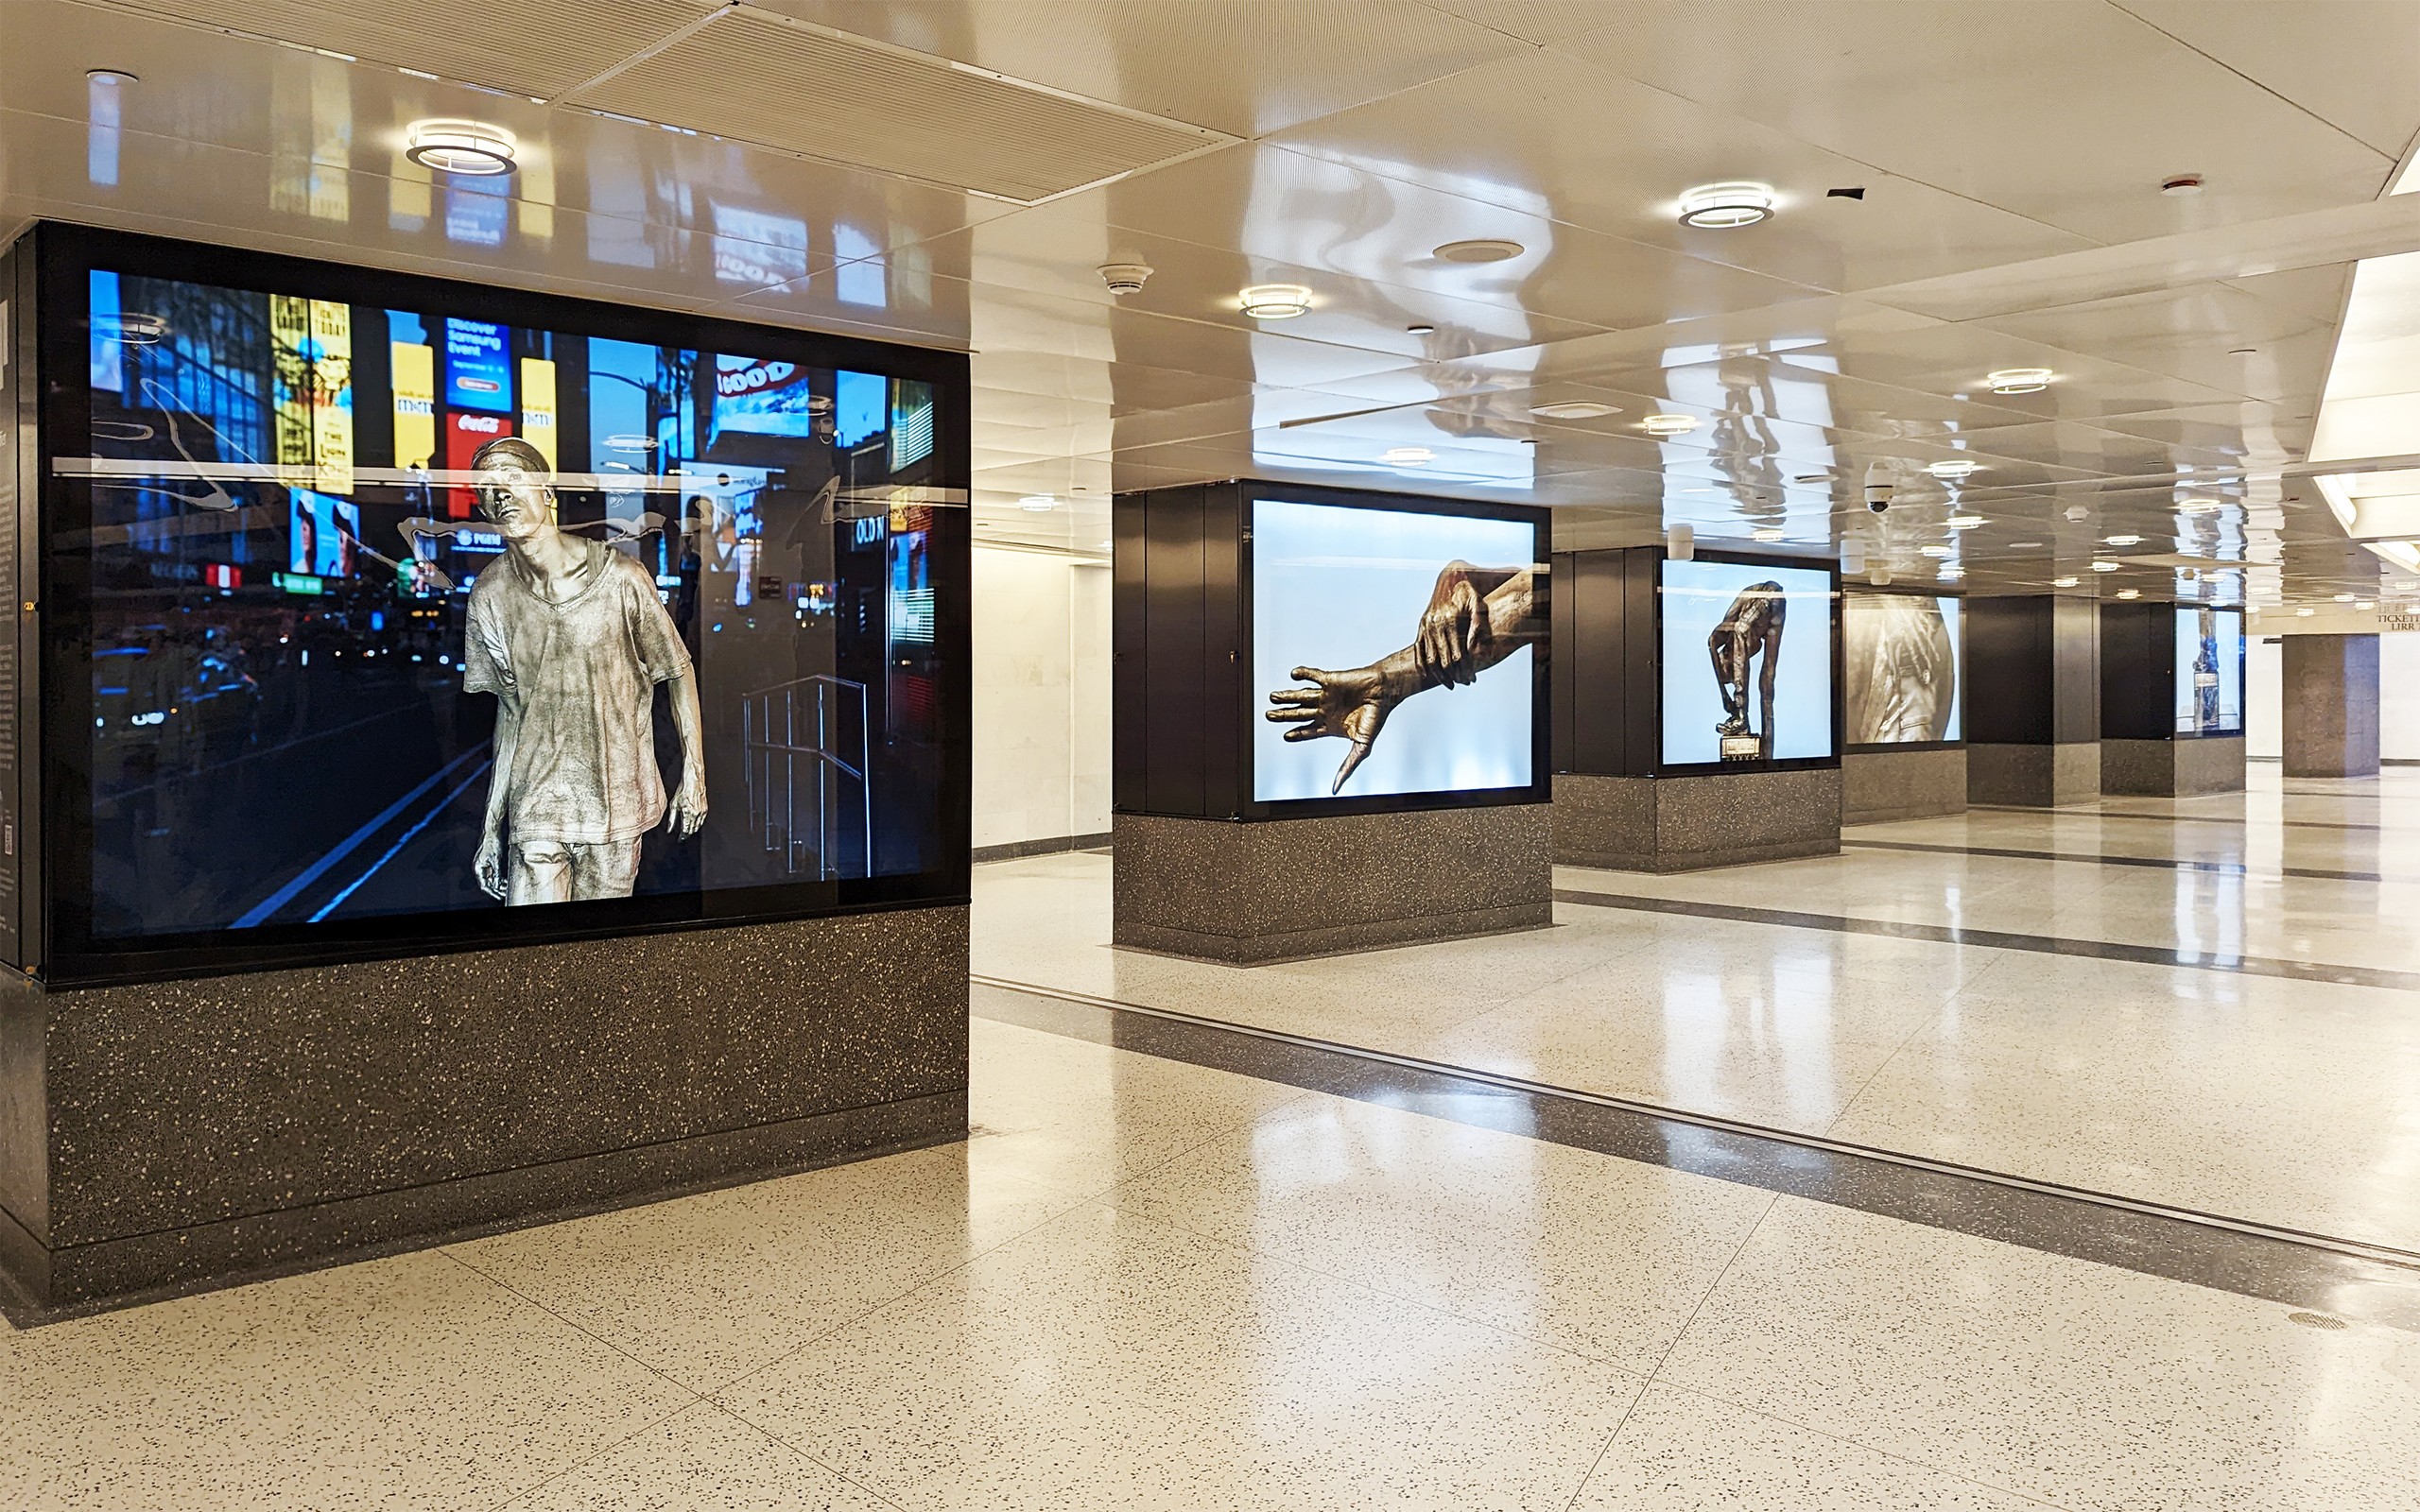 Grand Central Madison station digital art displays